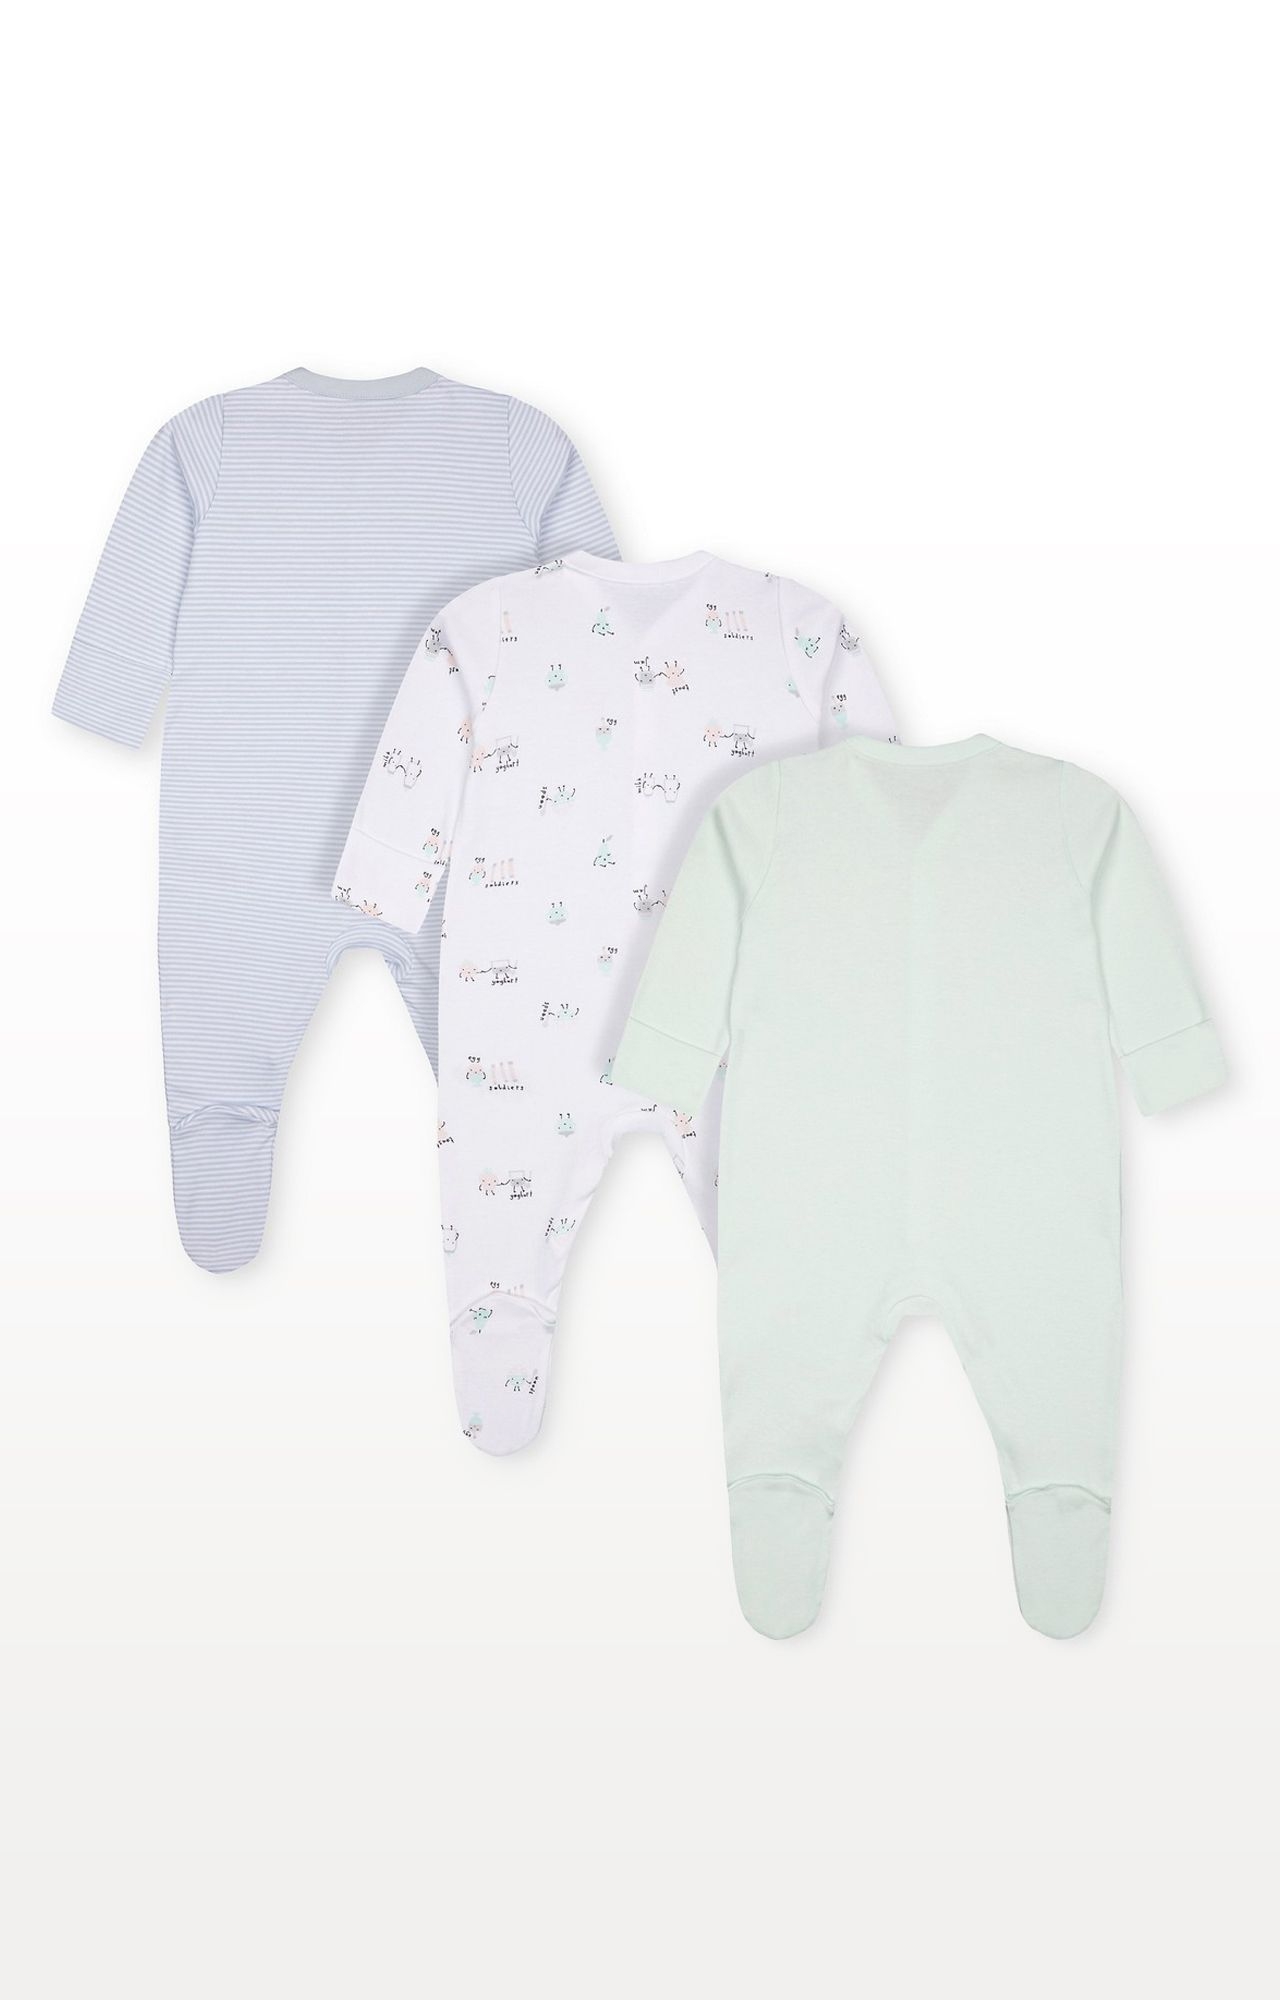 Mothercare | Breakfast Buddies Sleepsuits - Pack of 3 1